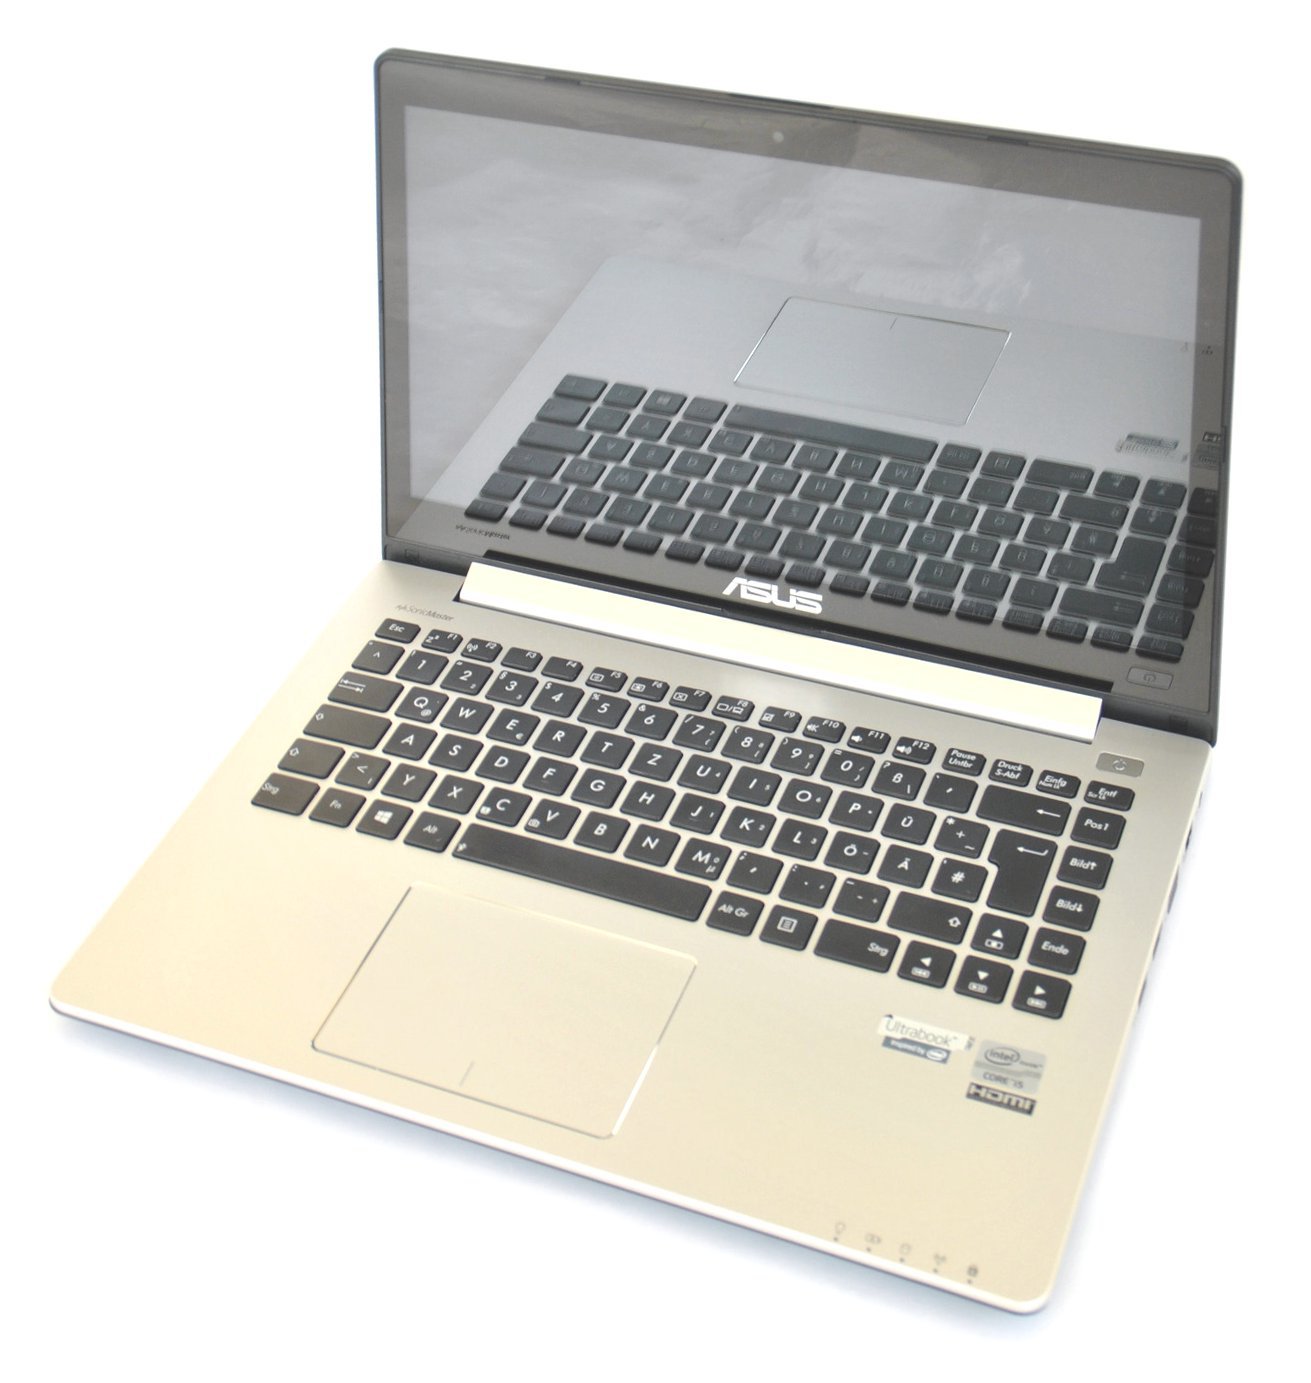 Asus VivoBook S400CA-CA006H - Notebookcheck.net External Reviews